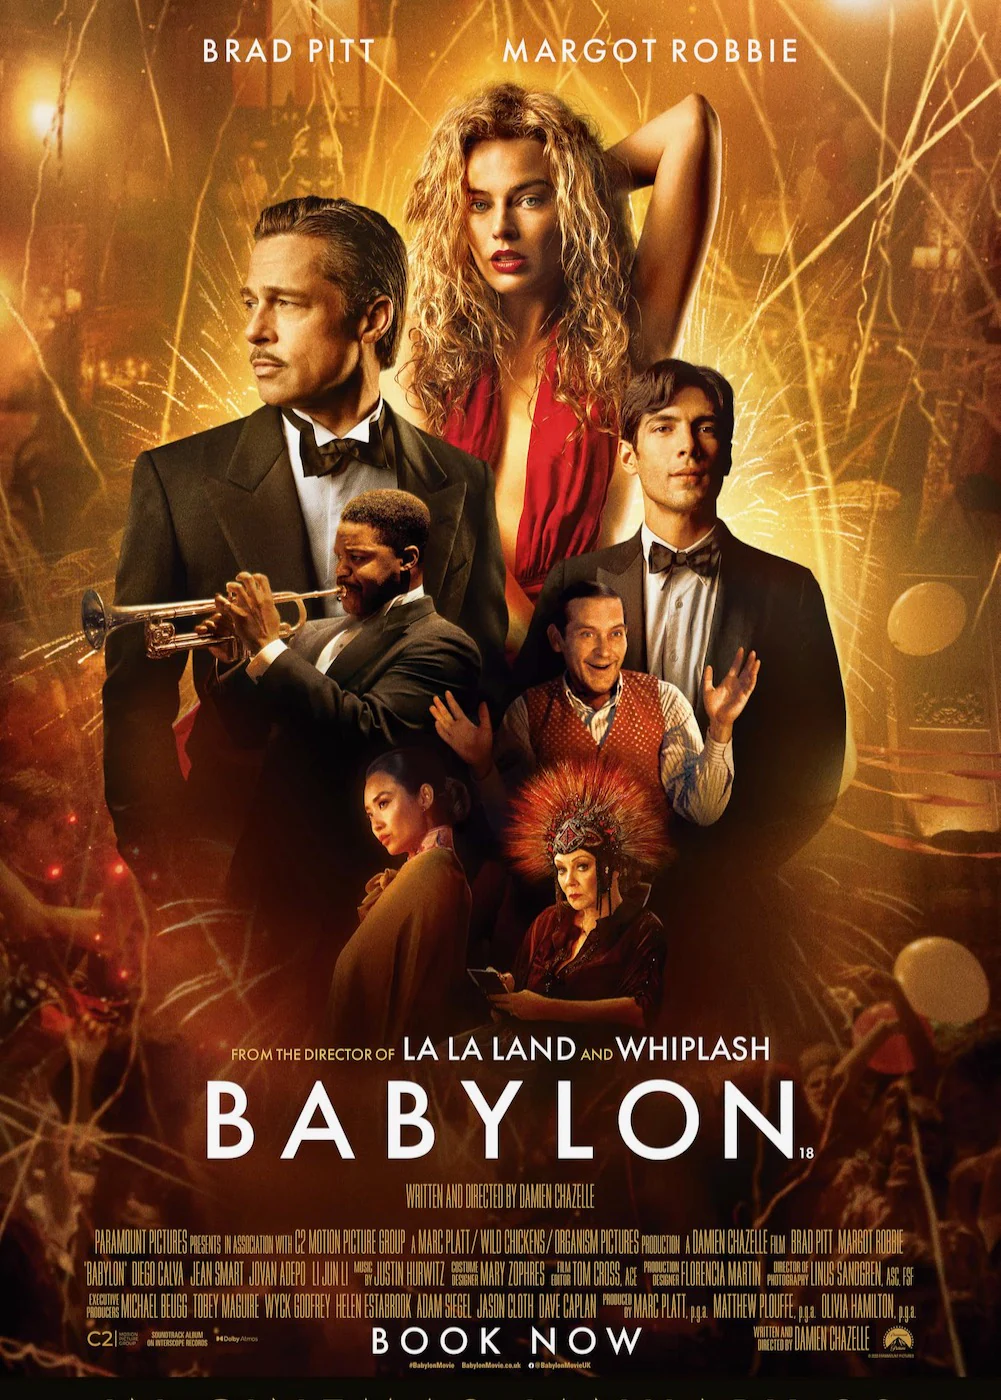 Babylon Movie Review: Brad Pitt, Margot Robbie Set Ablaze This Frenetic, Frantic Tribute to Hollywood